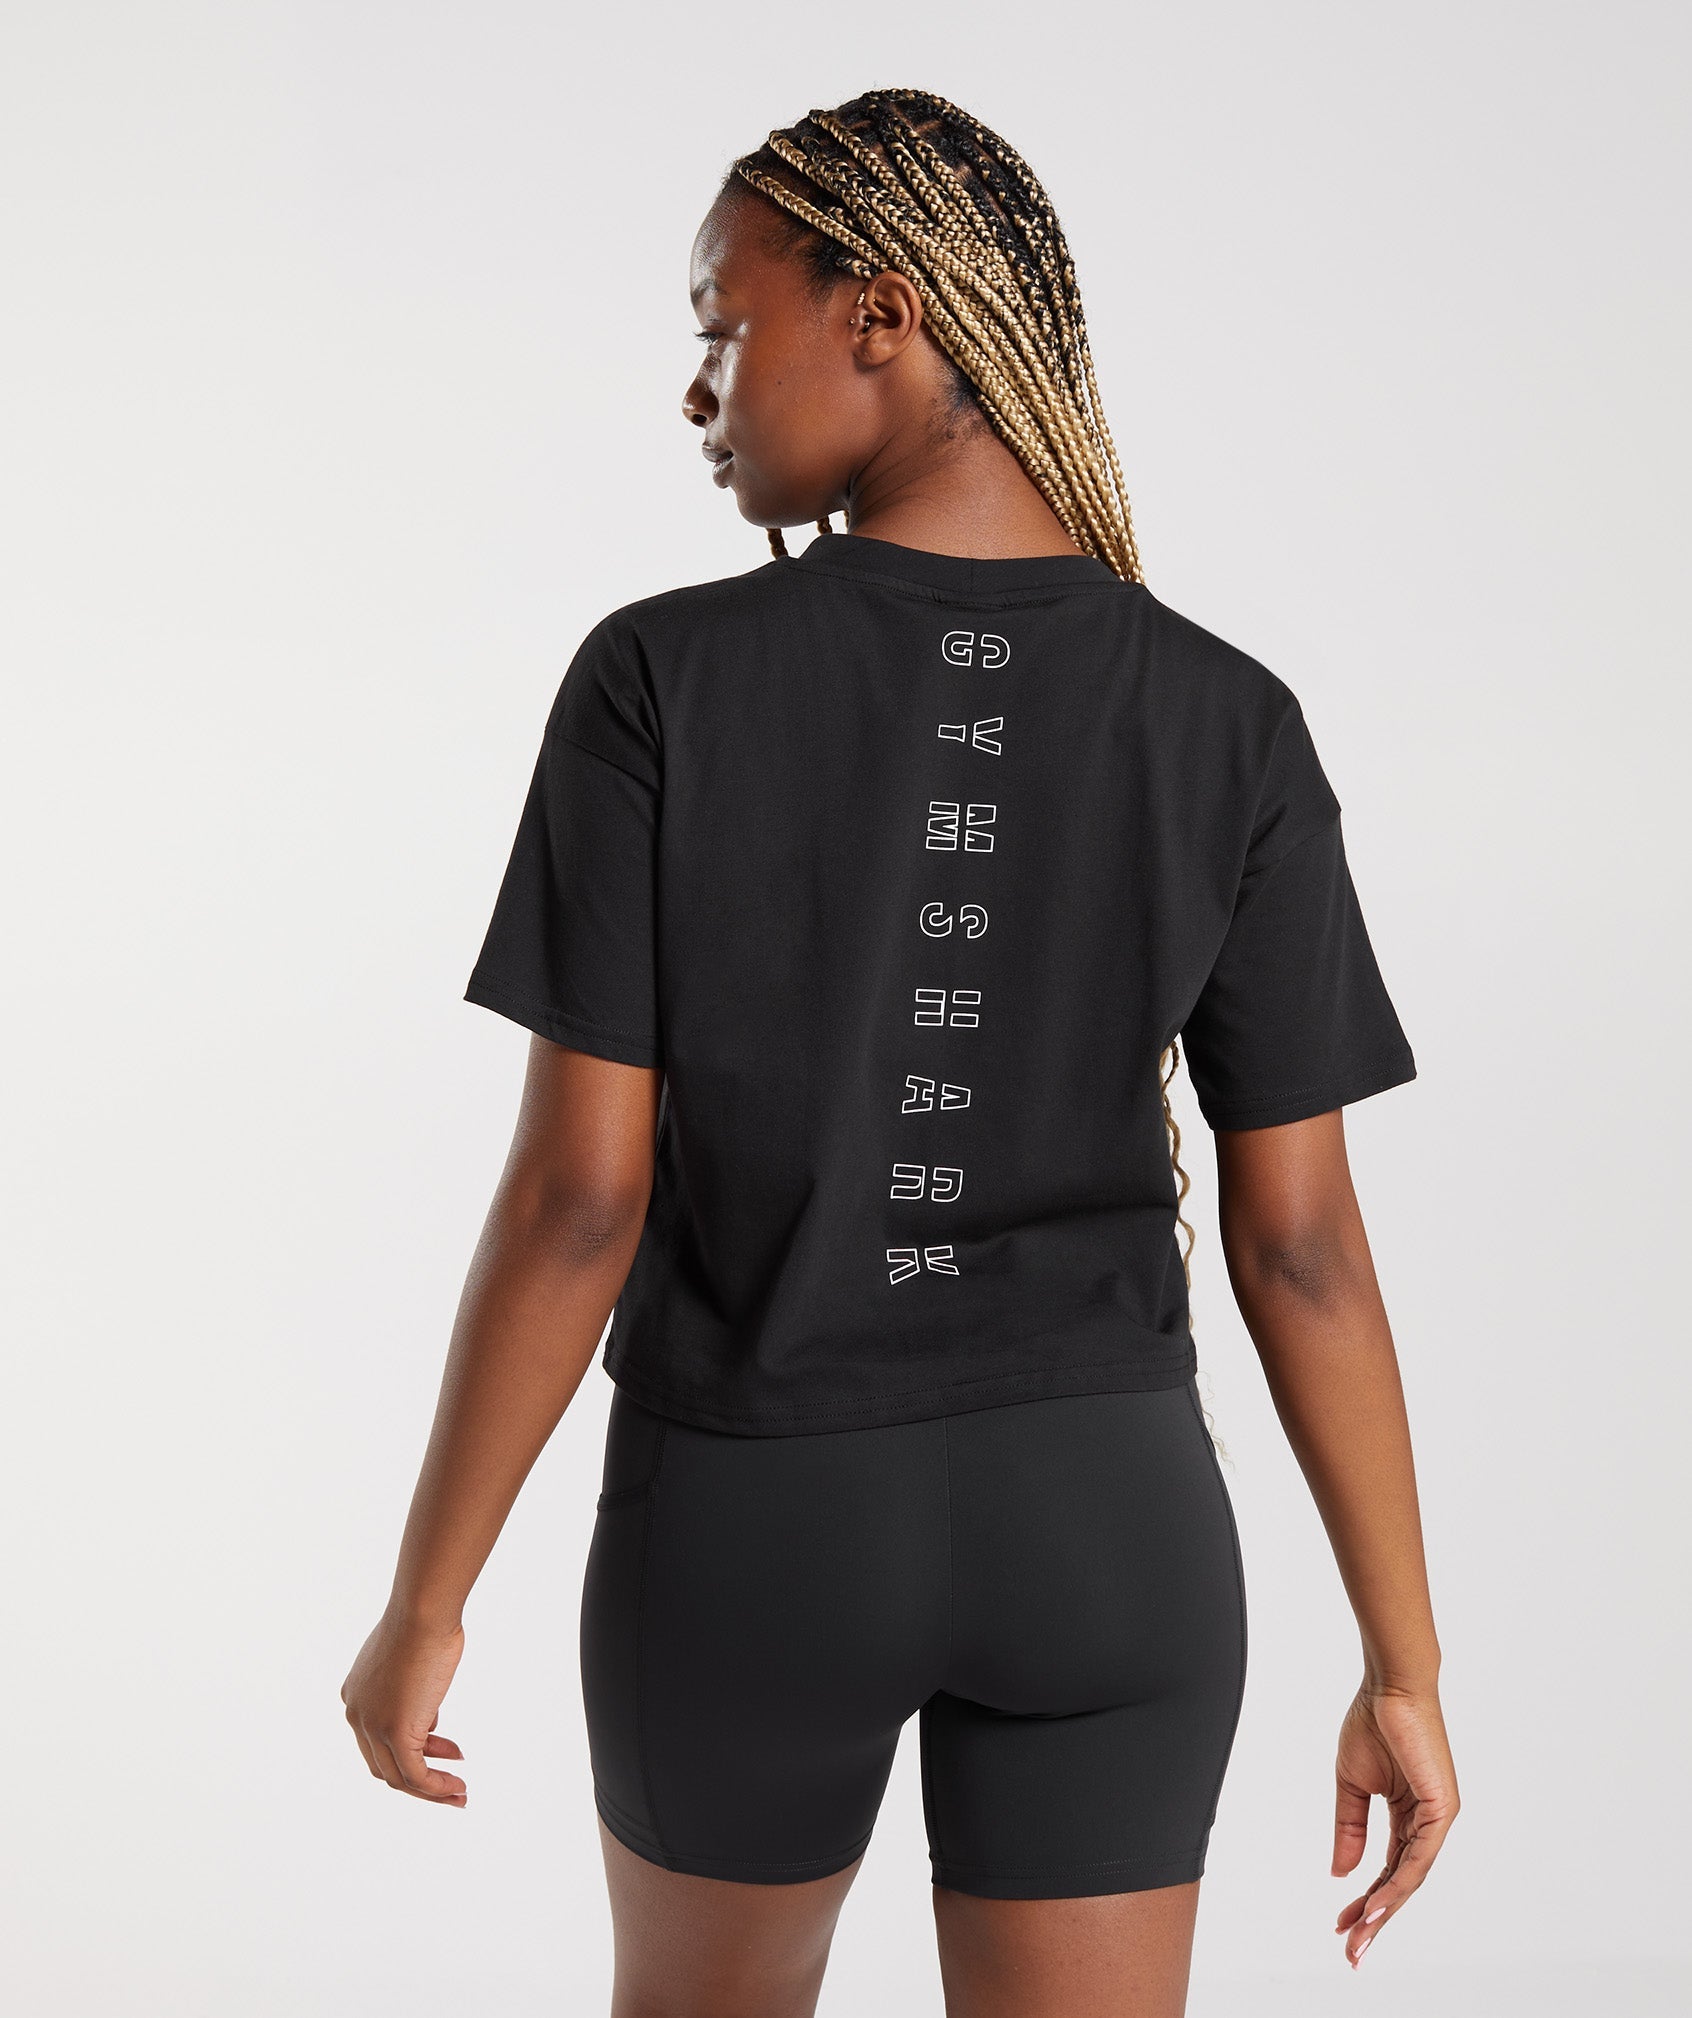 Short Sleeve Workout Shirts & Tops - Gymshark